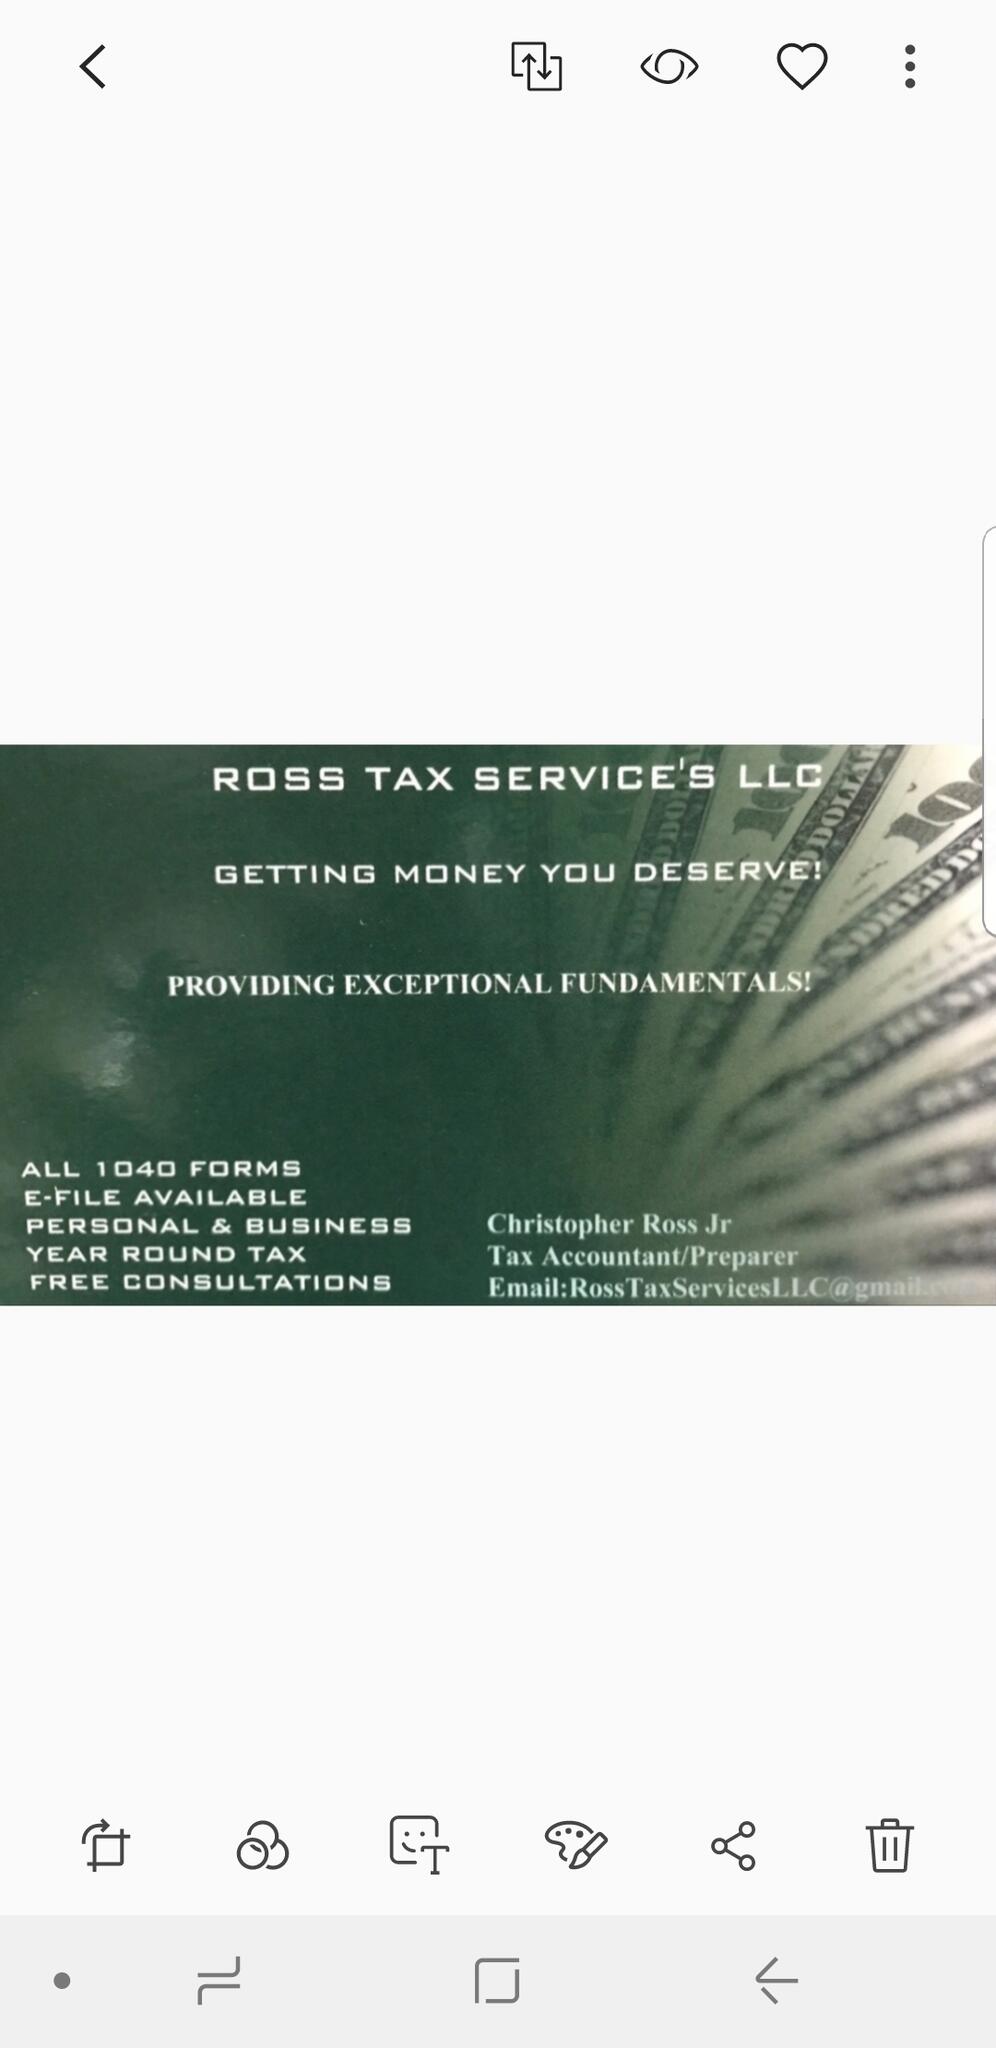 Top Tier Tax Service LLC - TopTier Tax Service is a Virtual office